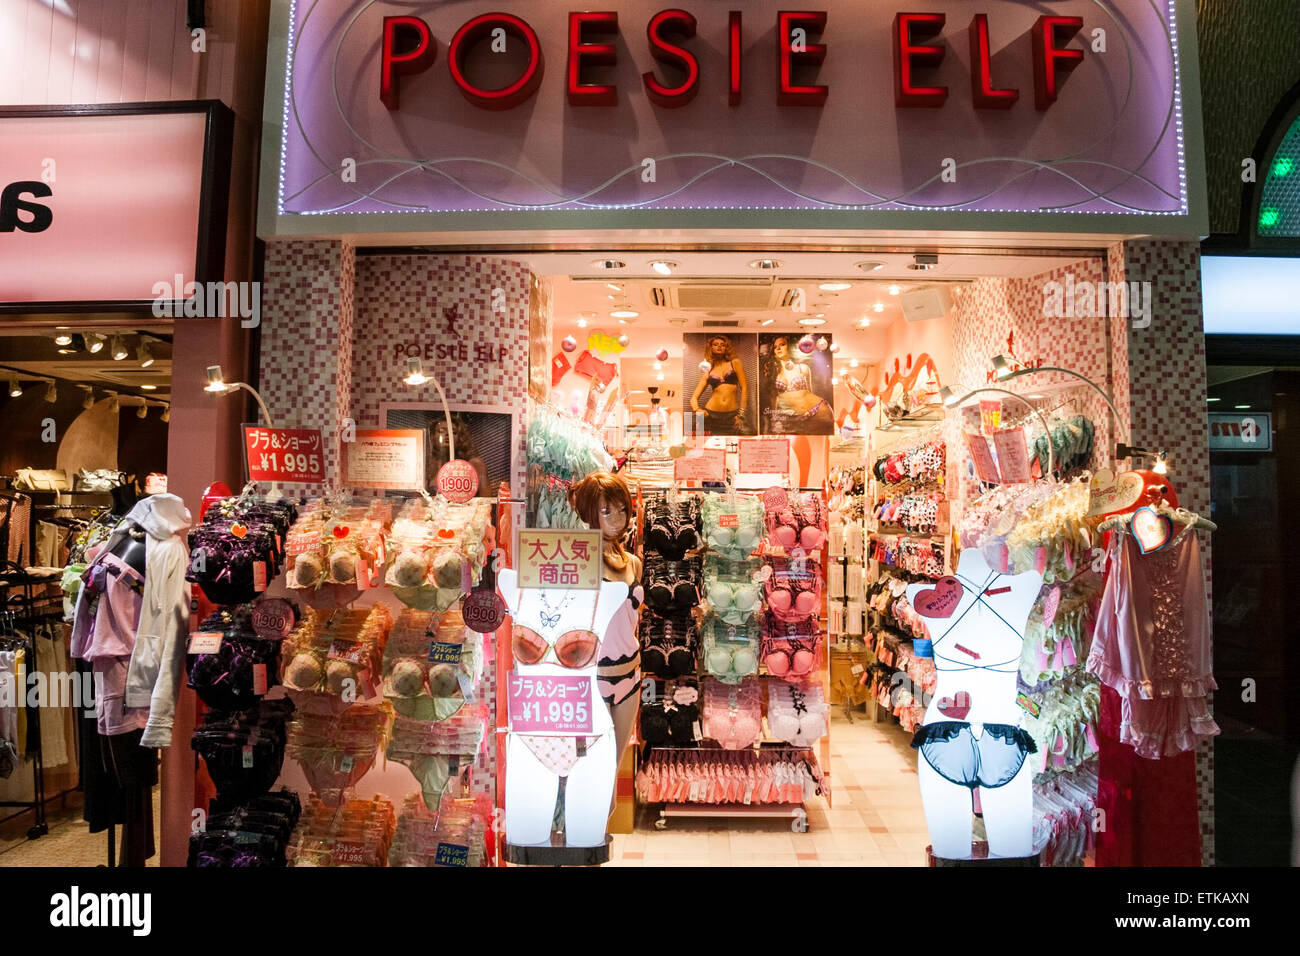 https://c8.alamy.com/comp/ETKAXN/japan-osaka-dotonbori-the-lingerie-shop-poesie-elf-at-night-time-exterior-ETKAXN.jpg